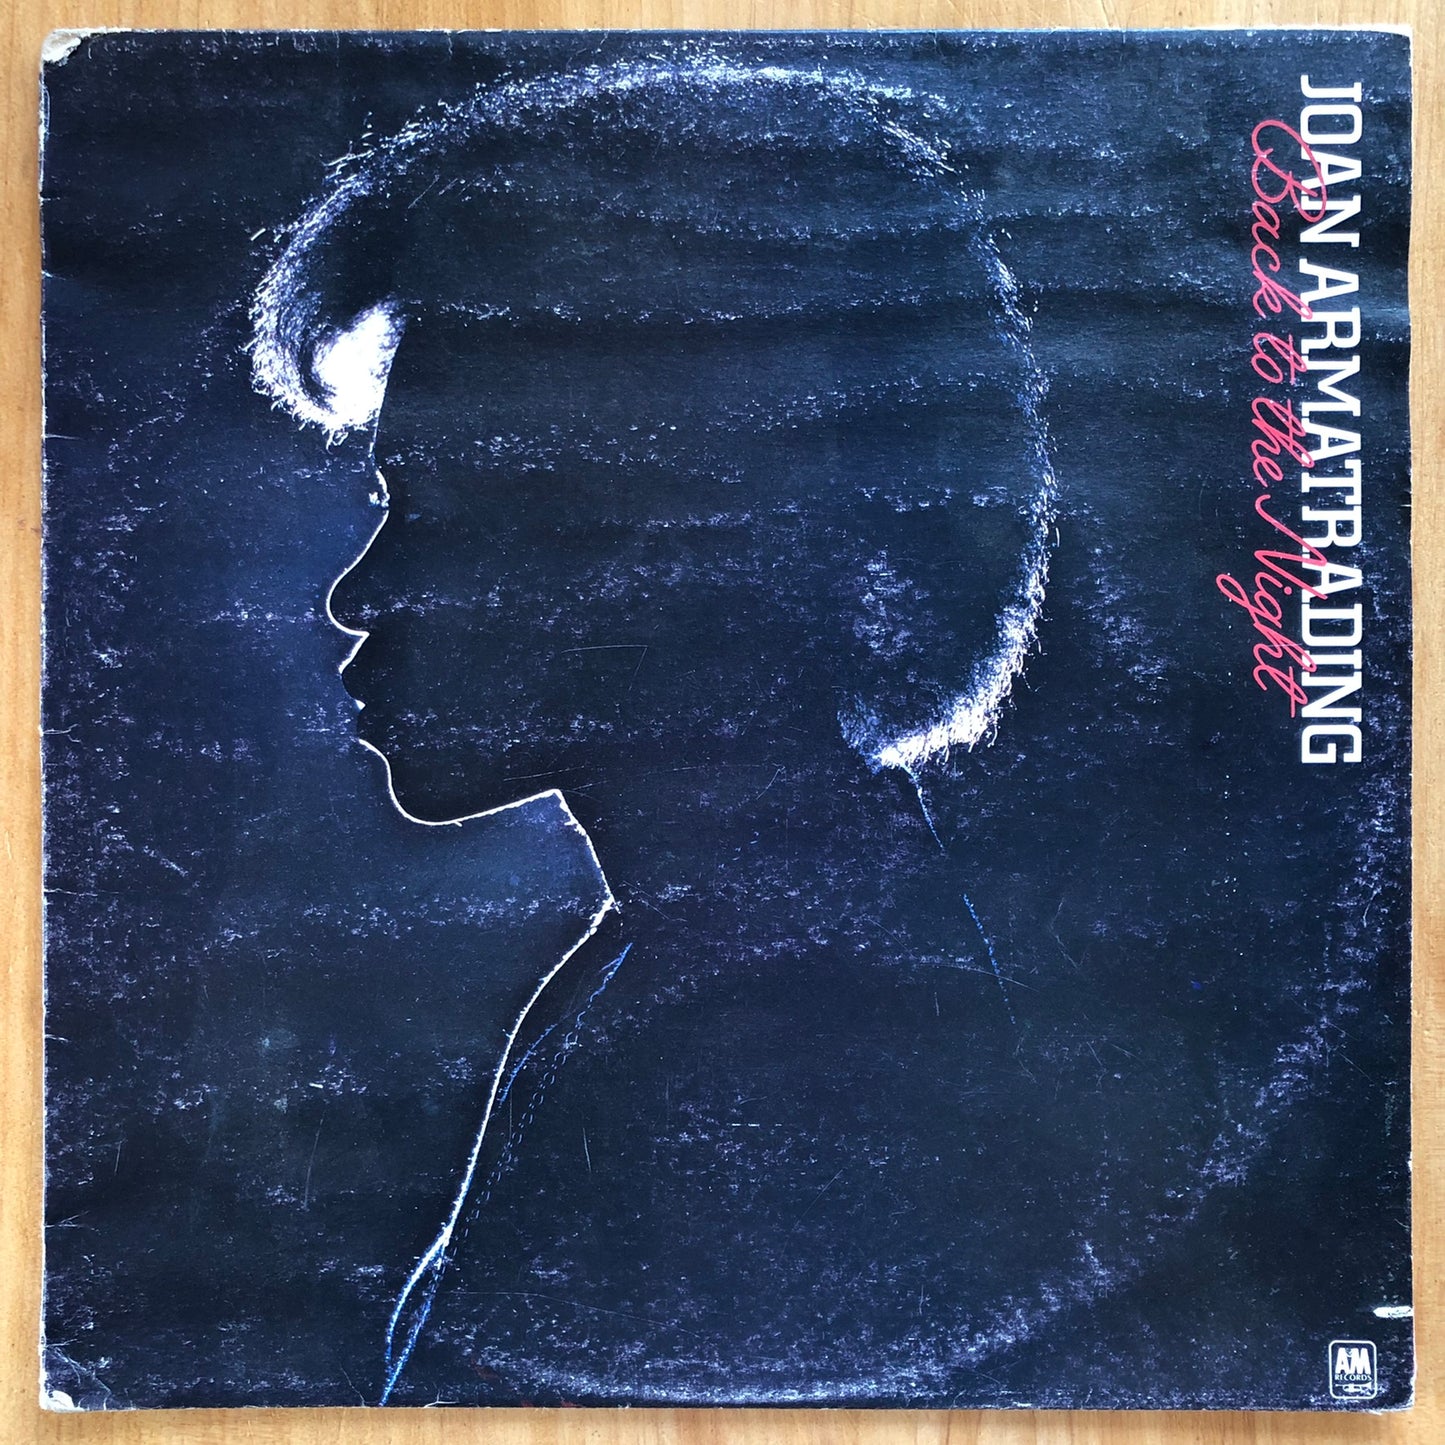 Joan Armatrading - Back to the Night